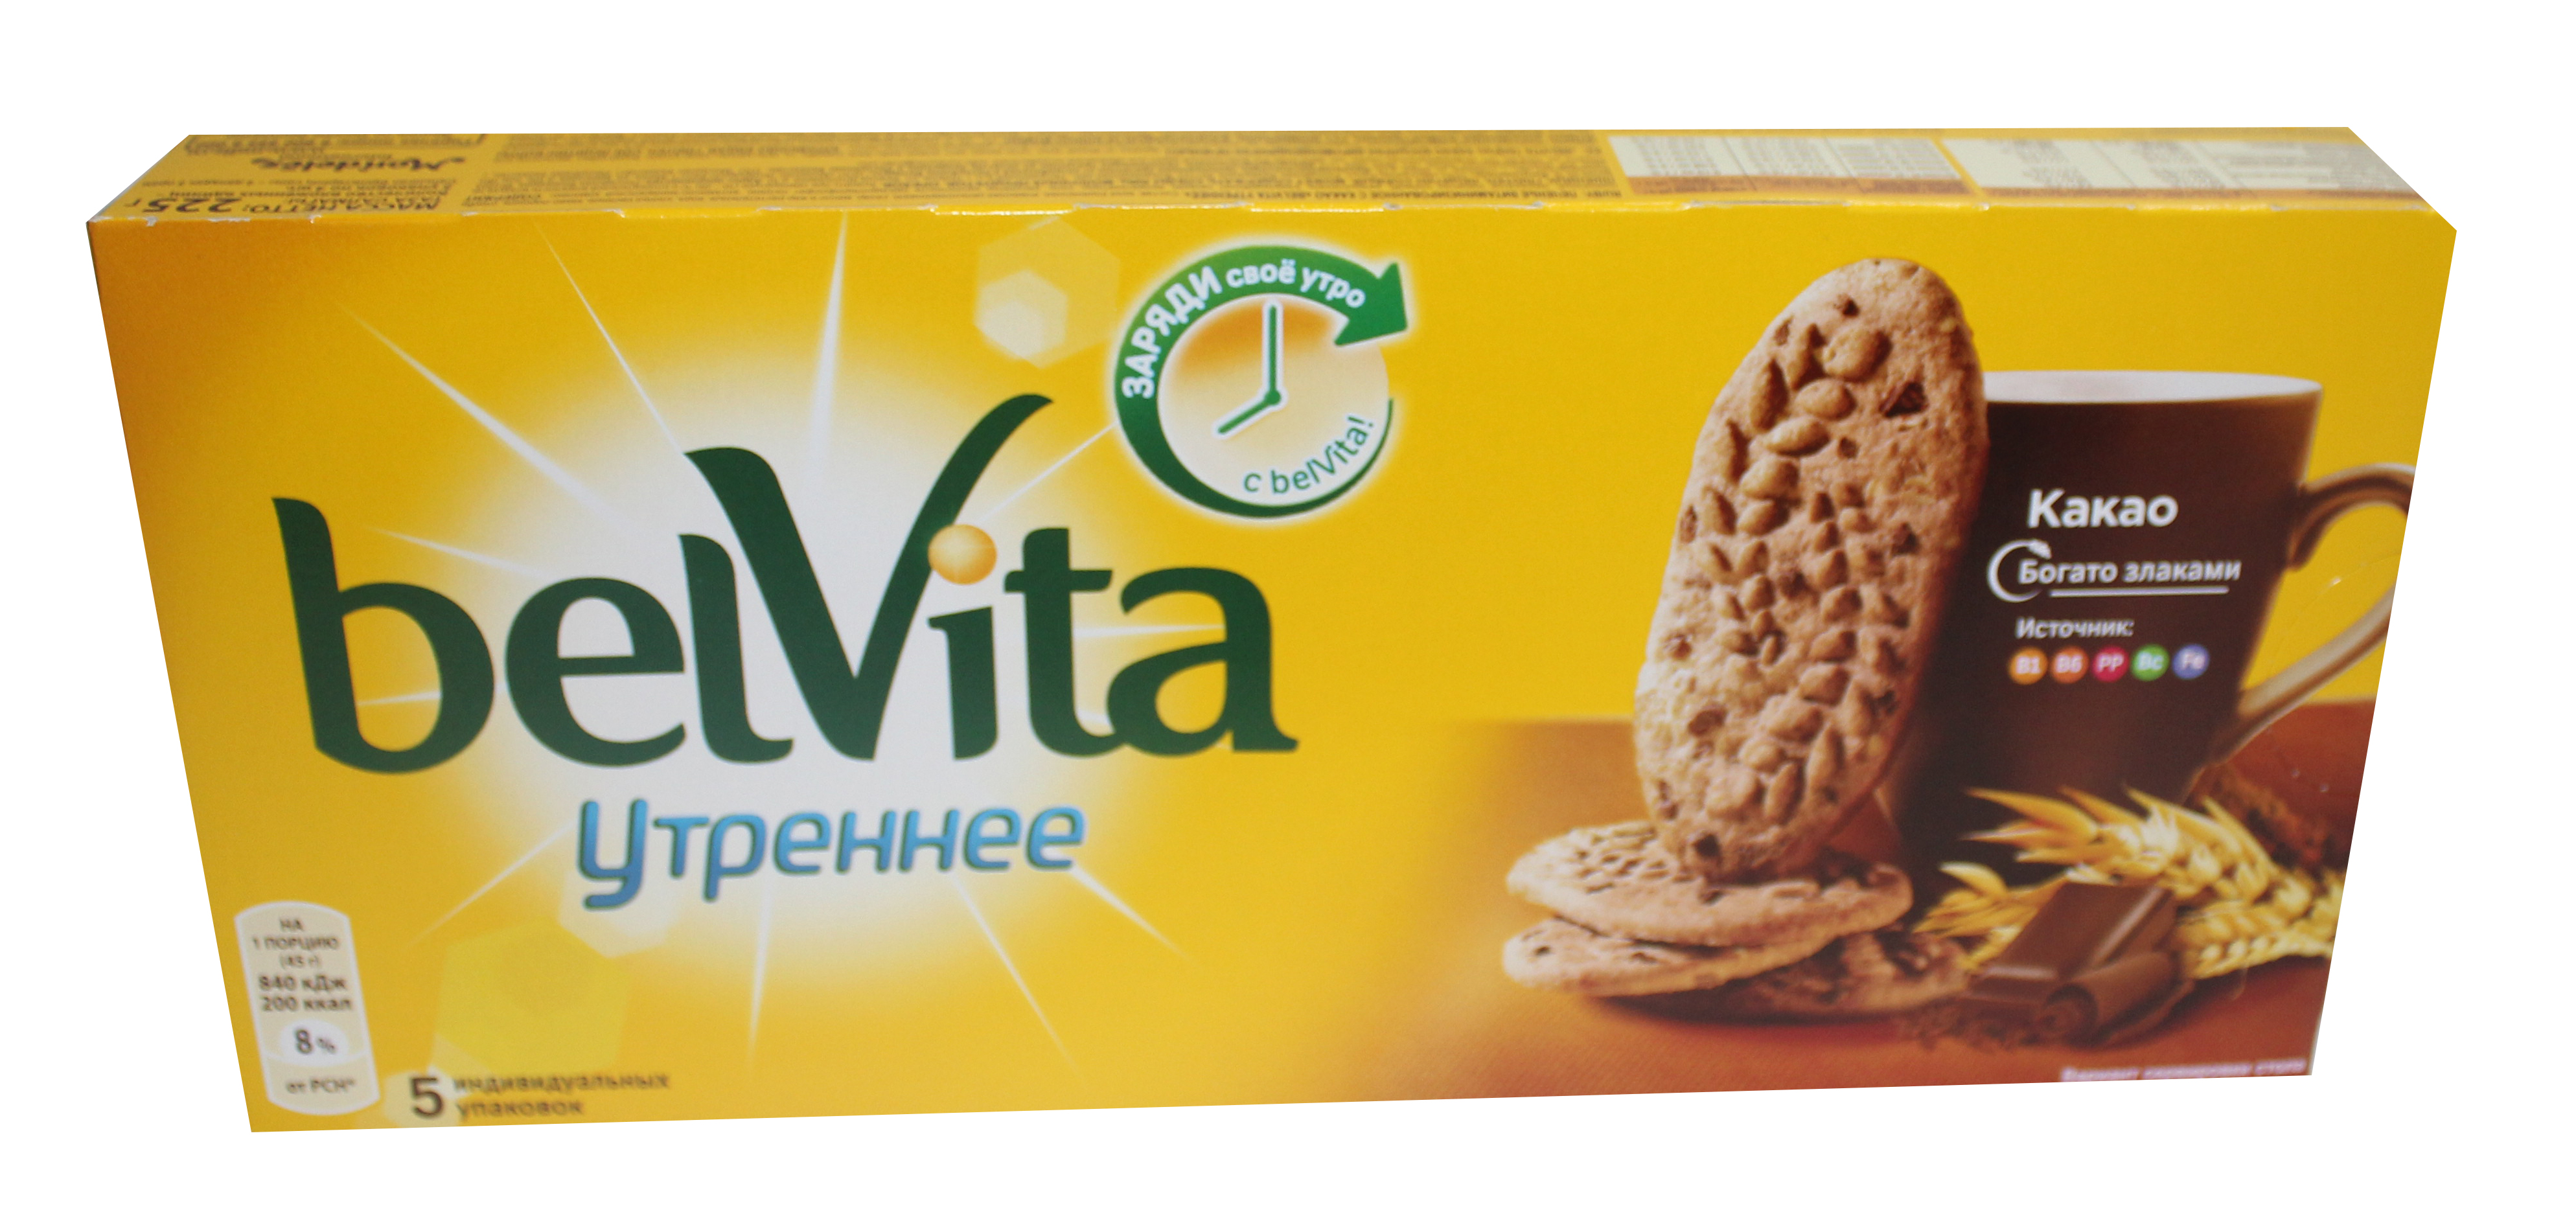 Belvita - печенье belvita 225ГР с какао 7622210721952. 